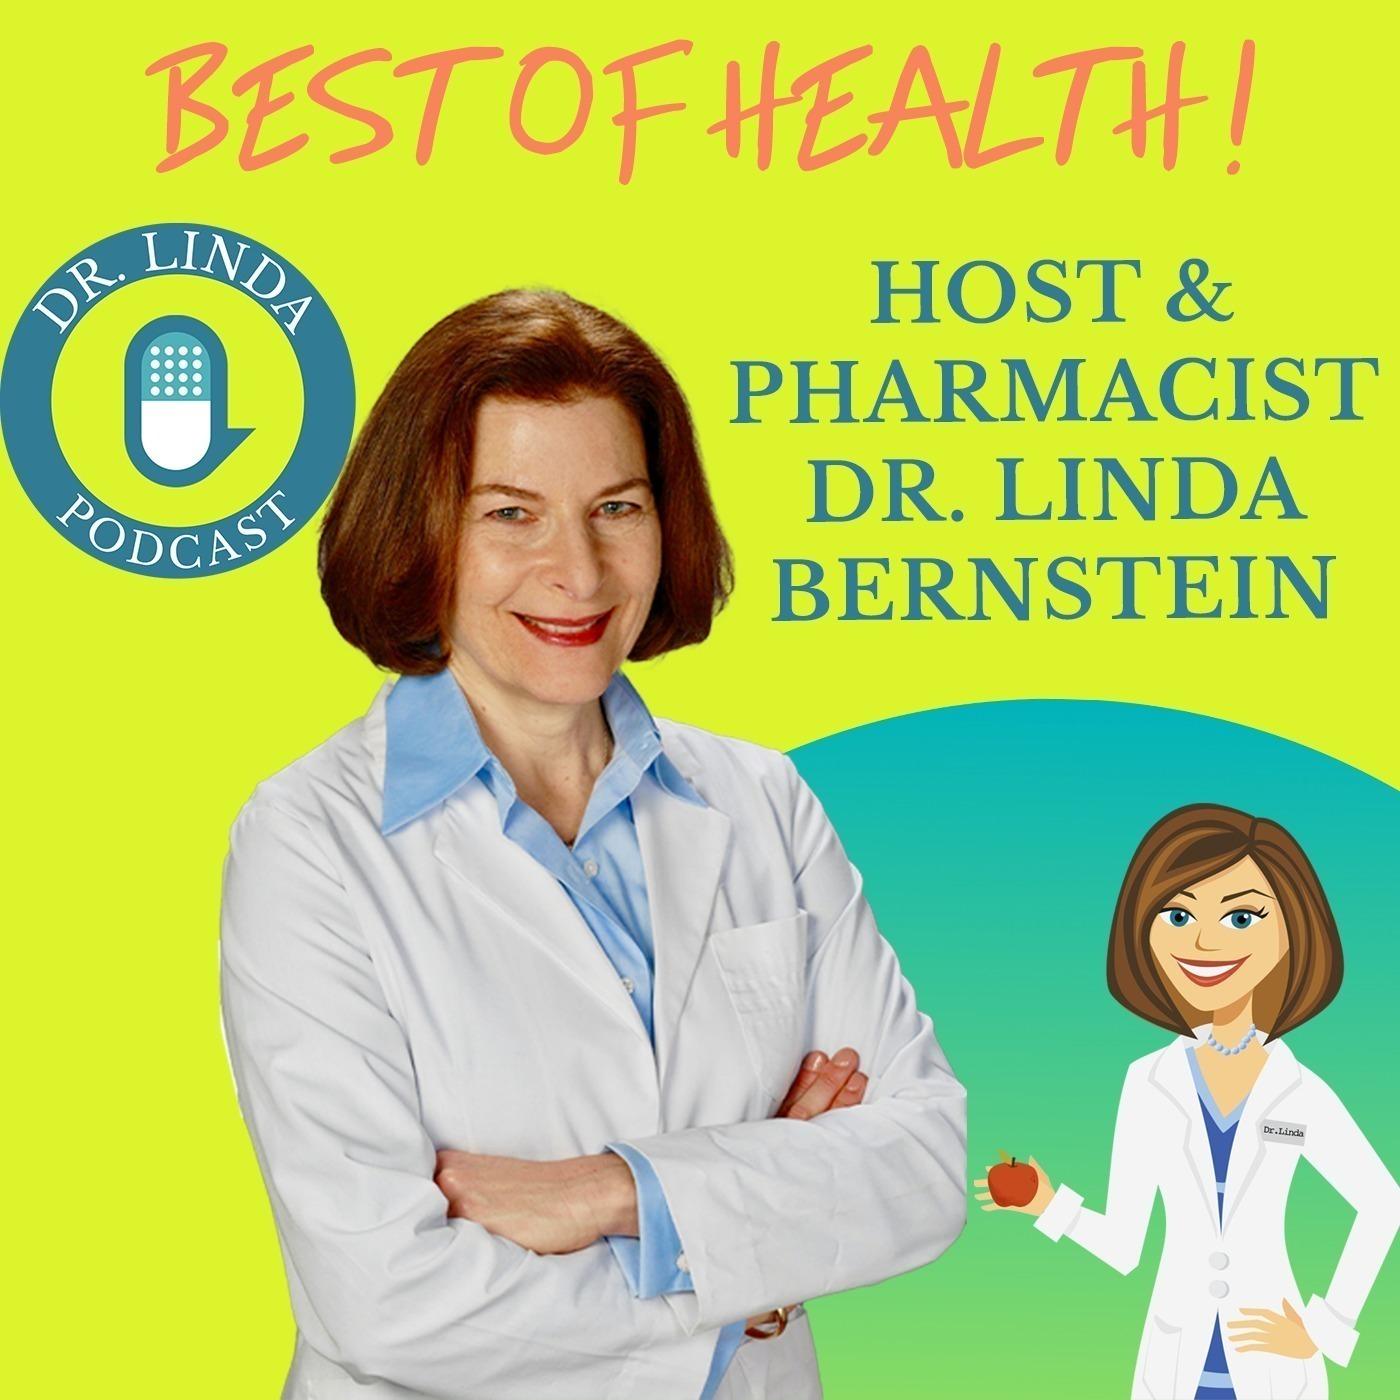 Dr. Linda Podcast - Best of Health!